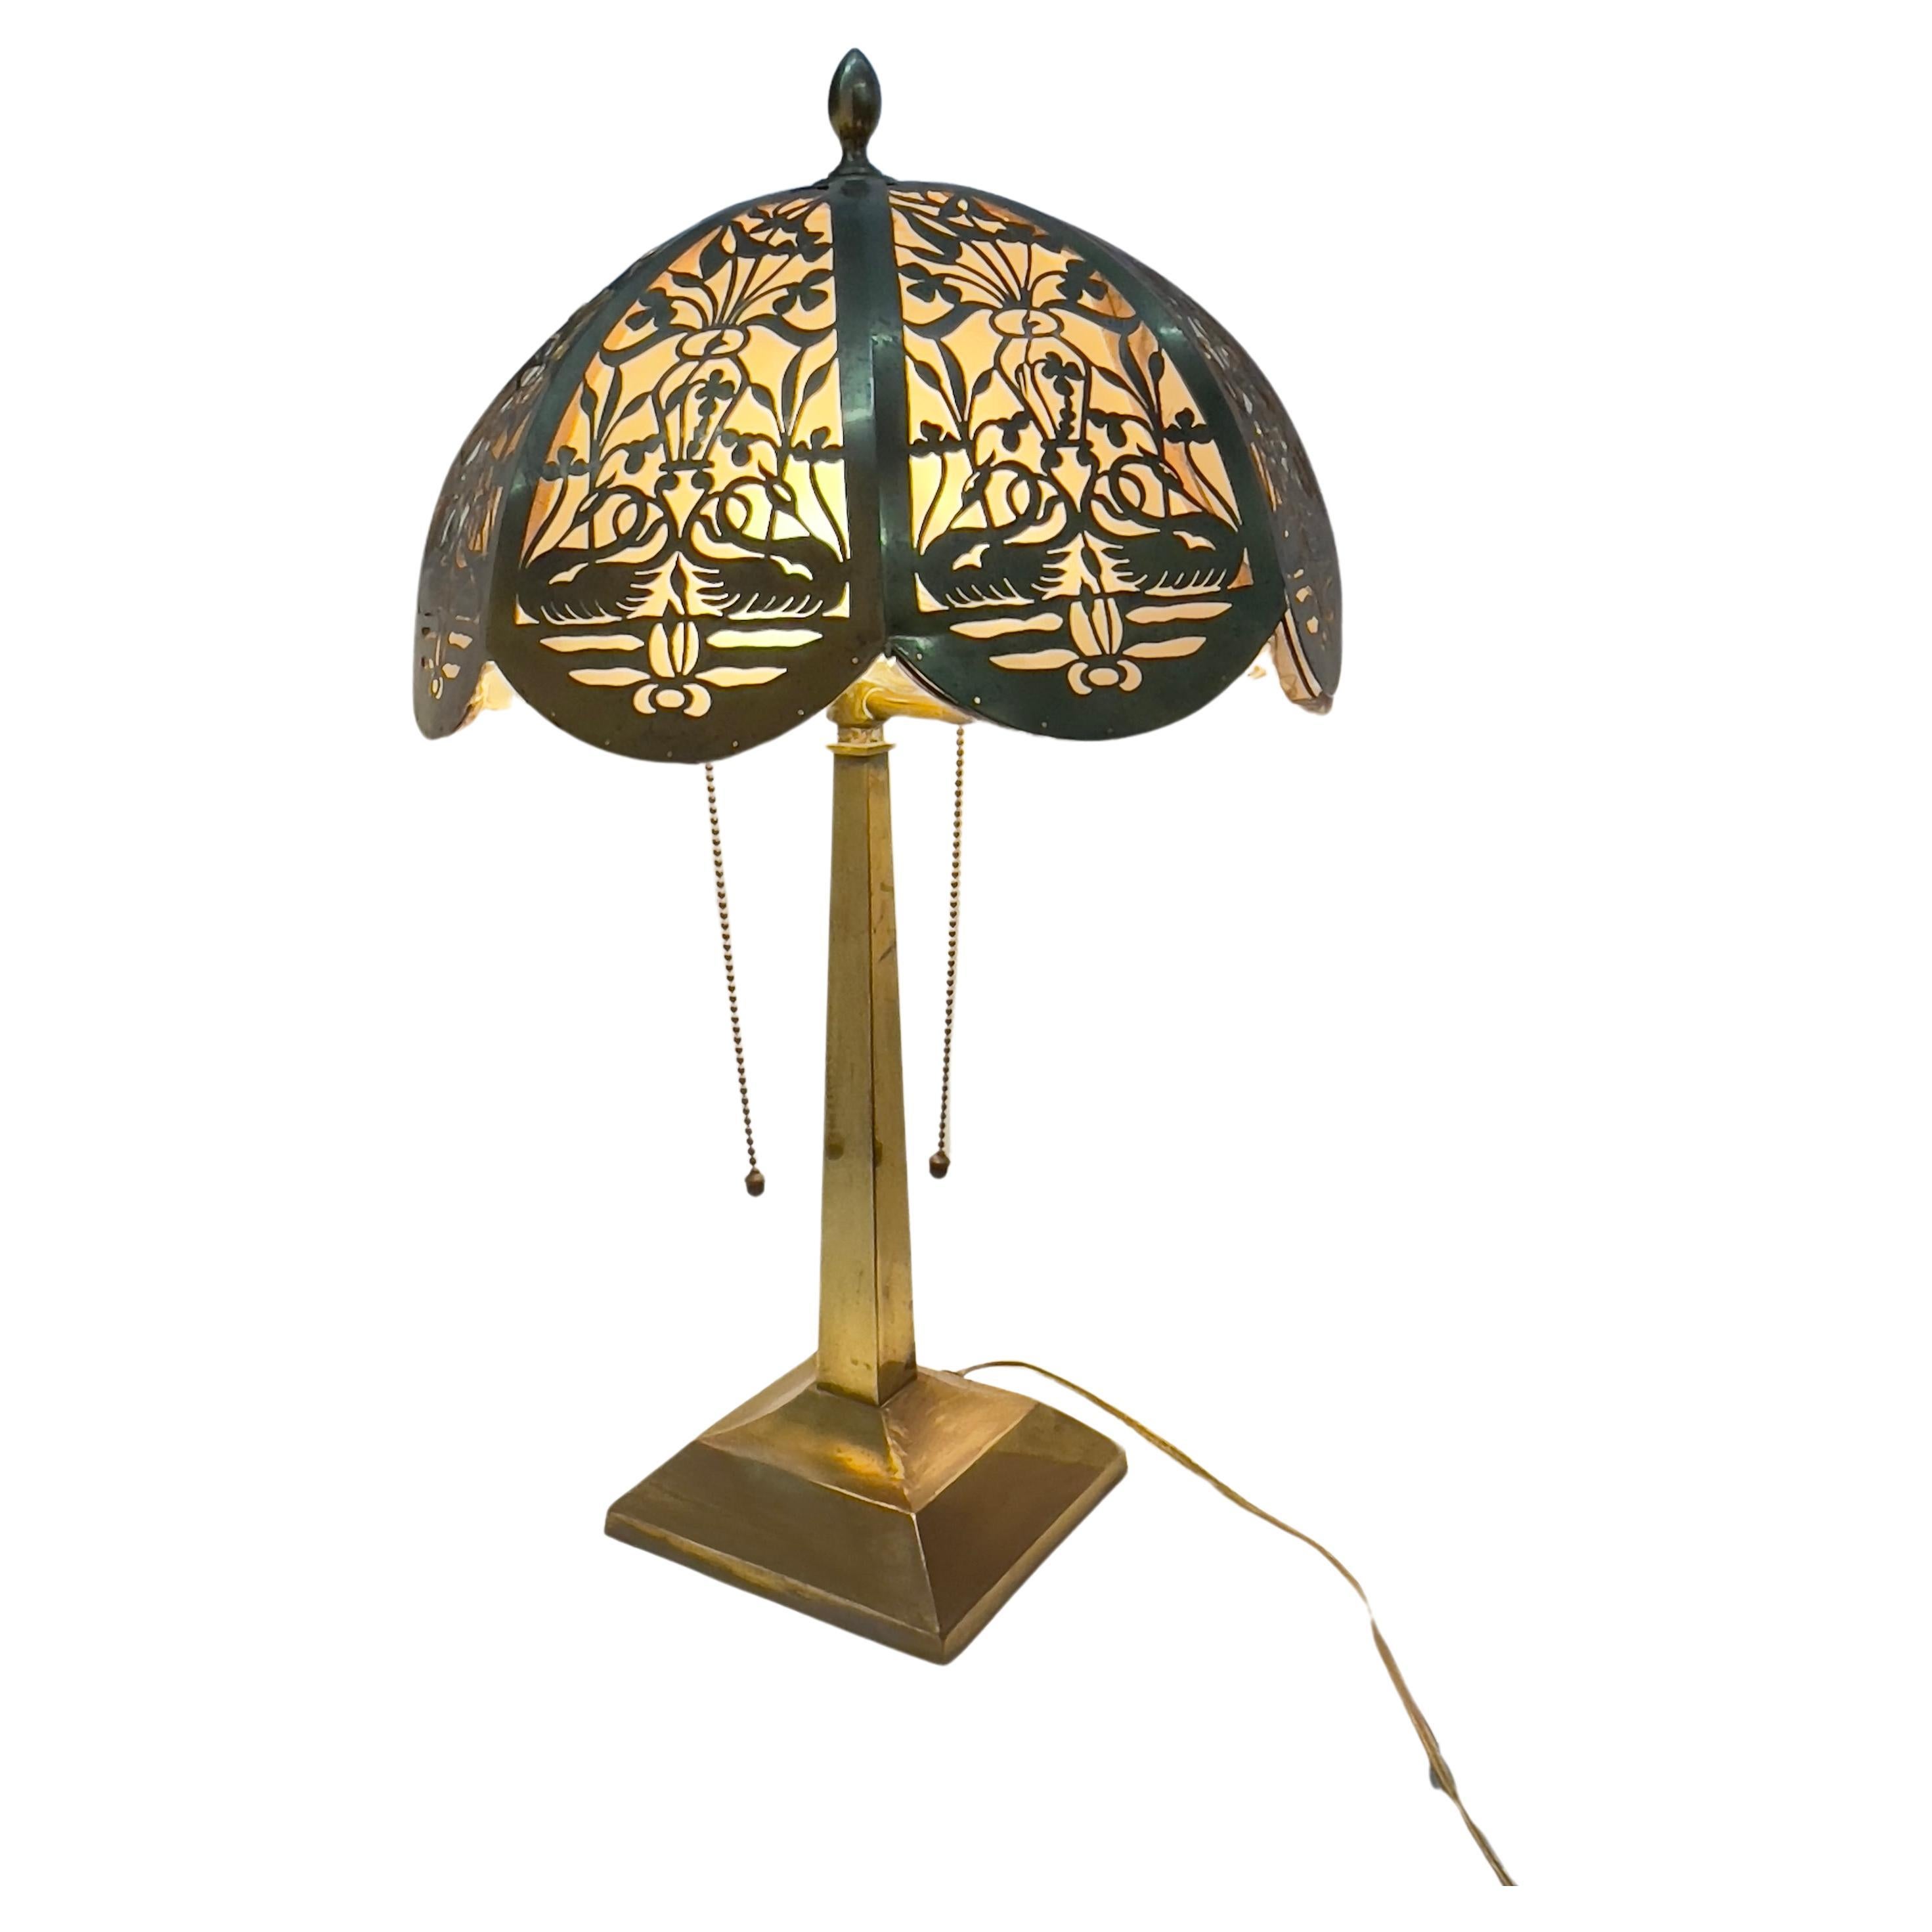 CIRCA 1920s Antike Messinglampe mit netzförmigem Messinglampenschirm